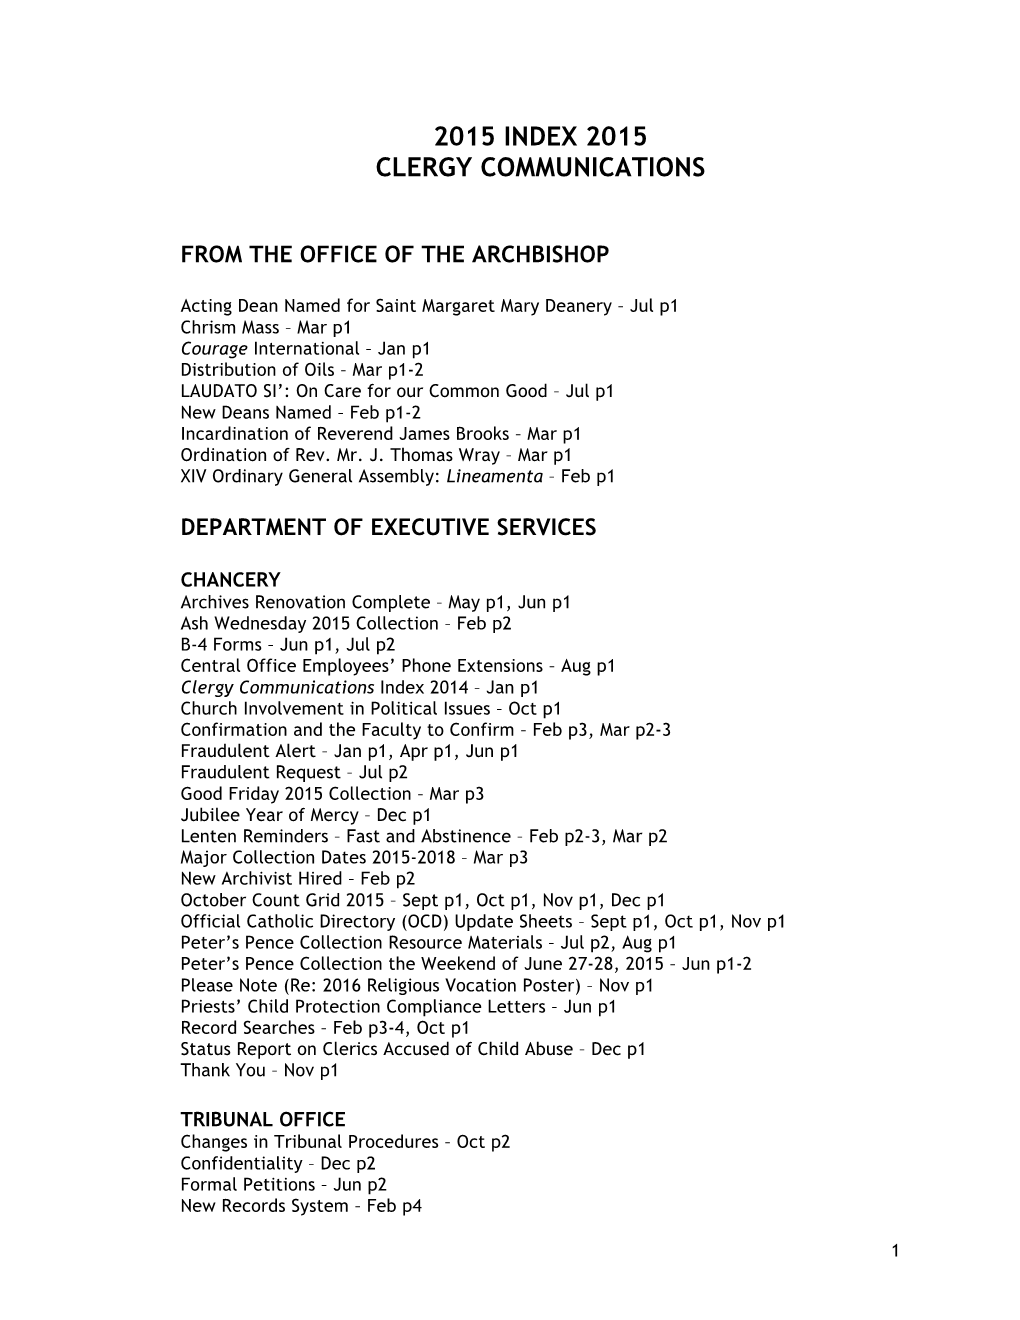 2015 Index 2015 Clergy Communications